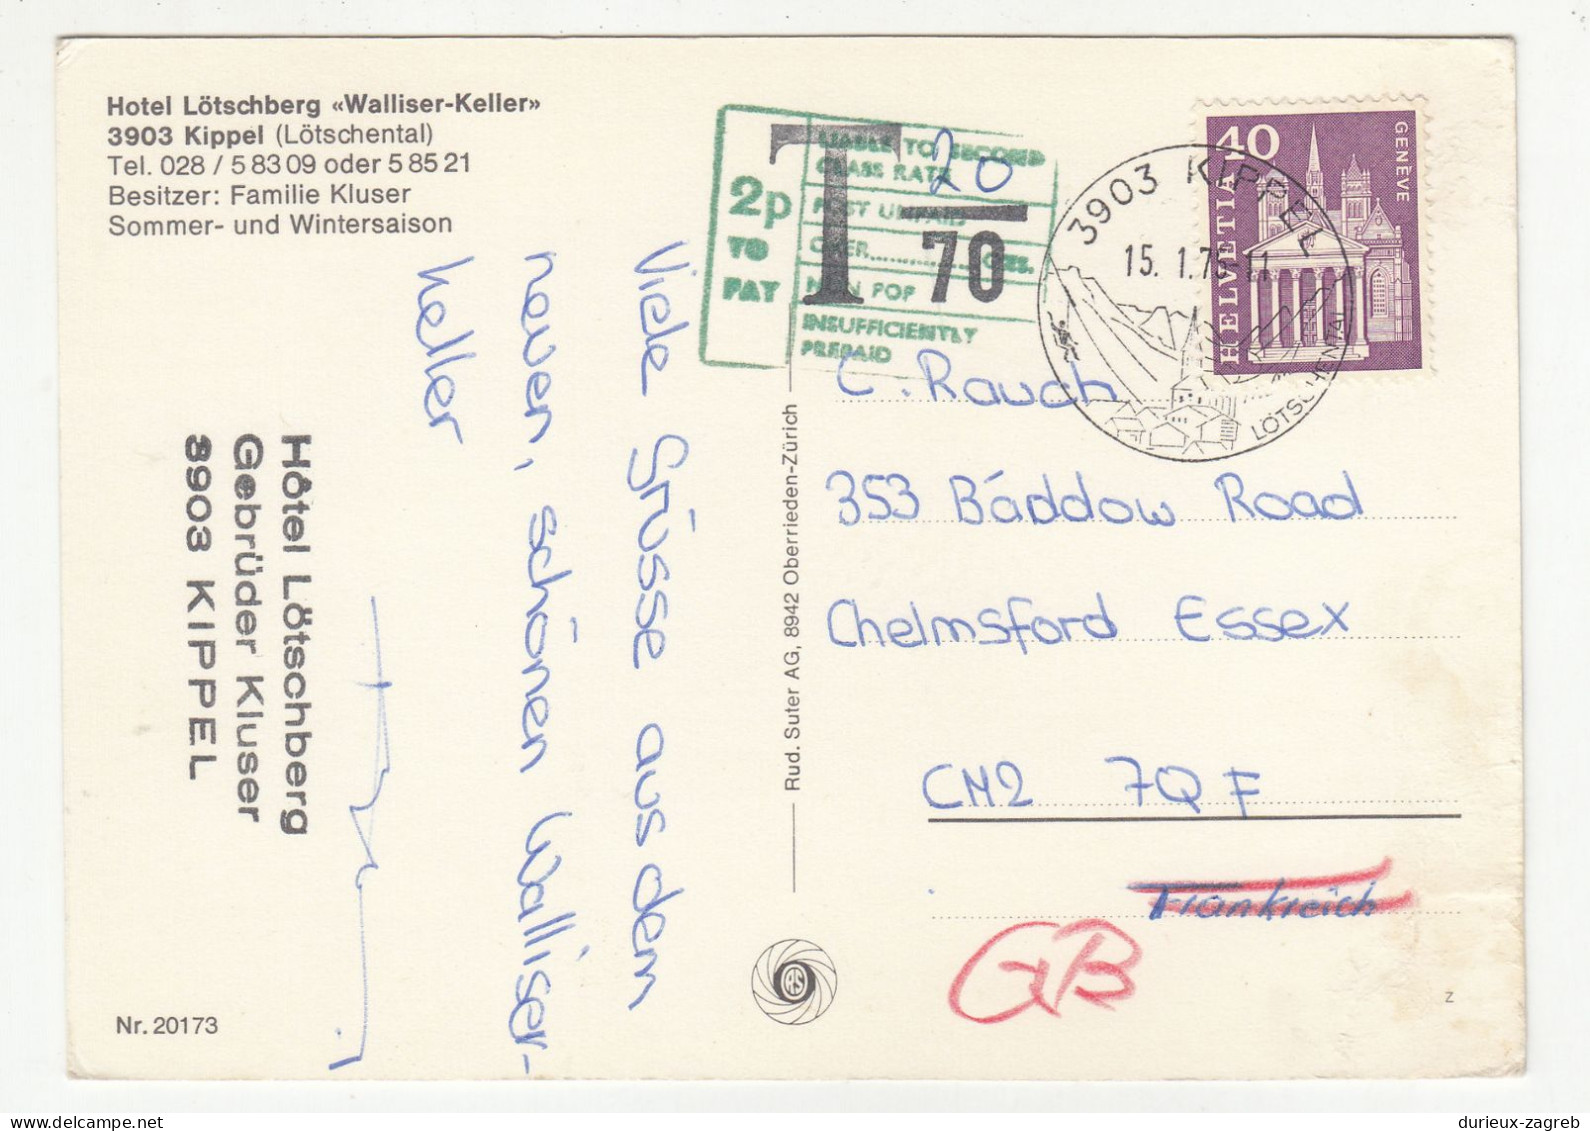 Switzerland Hotel Lötschberg "Walliser-Keller" Postcard Posted 1975 - Taxed Postage Due B240510 - Impuestos